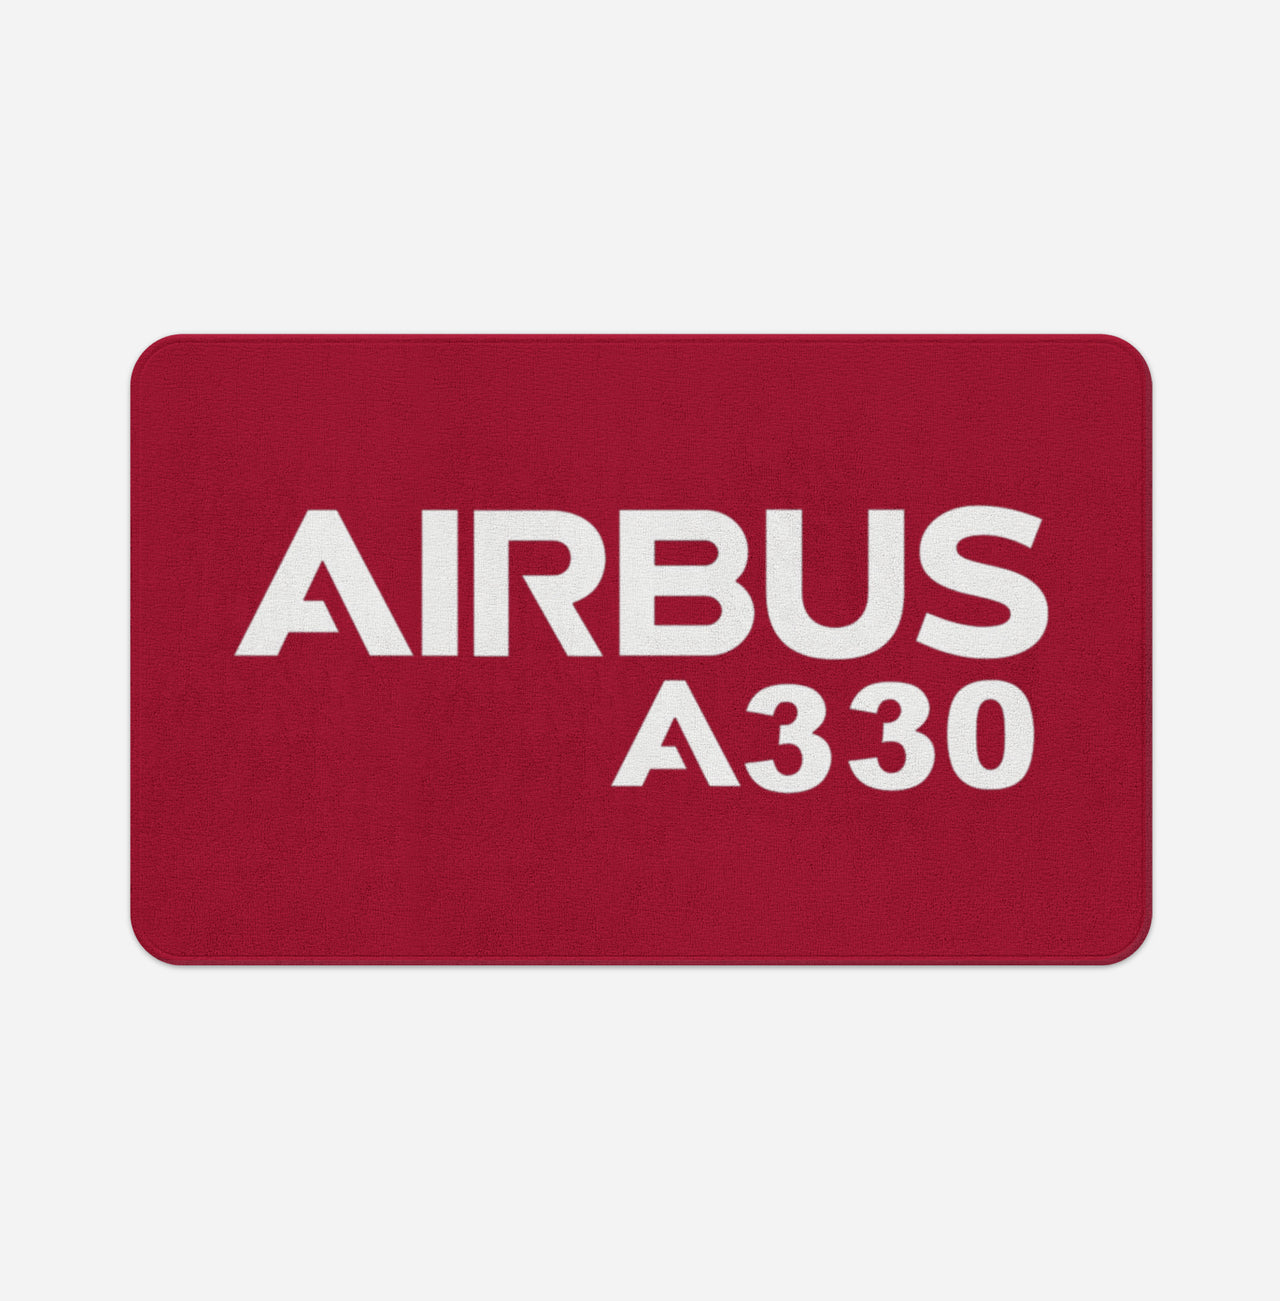 Airbus A330 & Text Designed Bath Mats